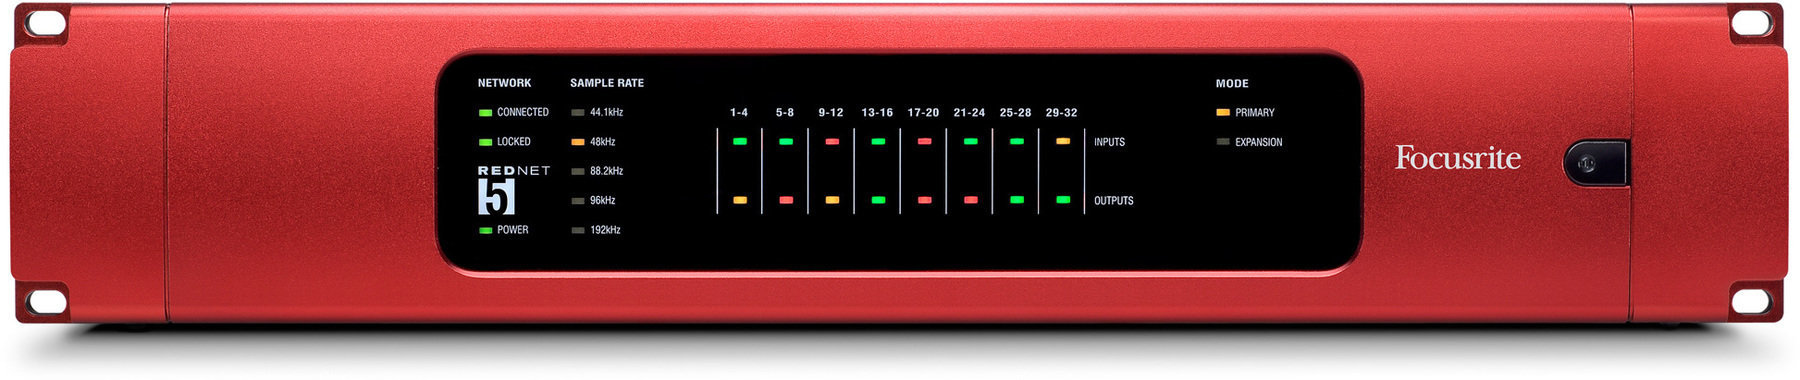 Ethernet-audioomzetter - geluidskaart Focusrite REDNETHD